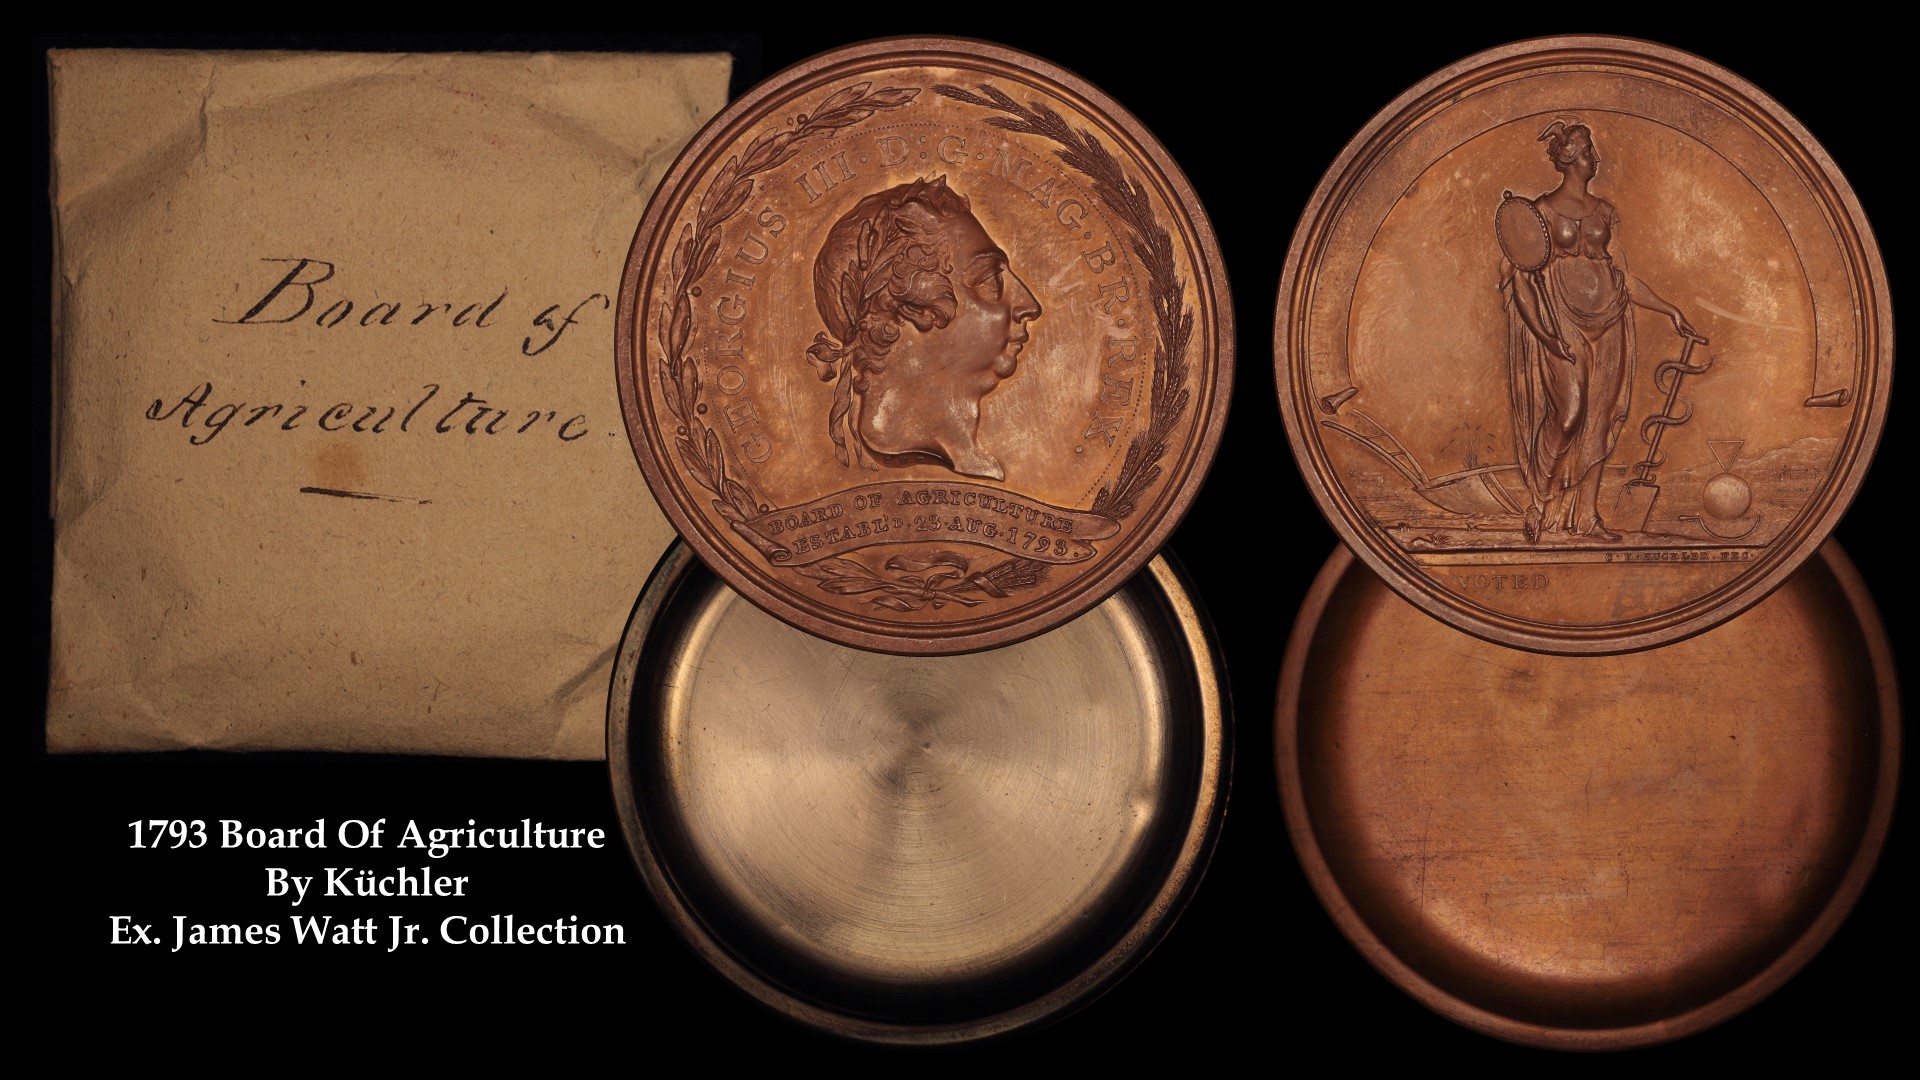 1793 Board Of Agriculture Medal 48 mm Pollard 6 Ex James Watt Jr. With Shells and Warpper.jpg